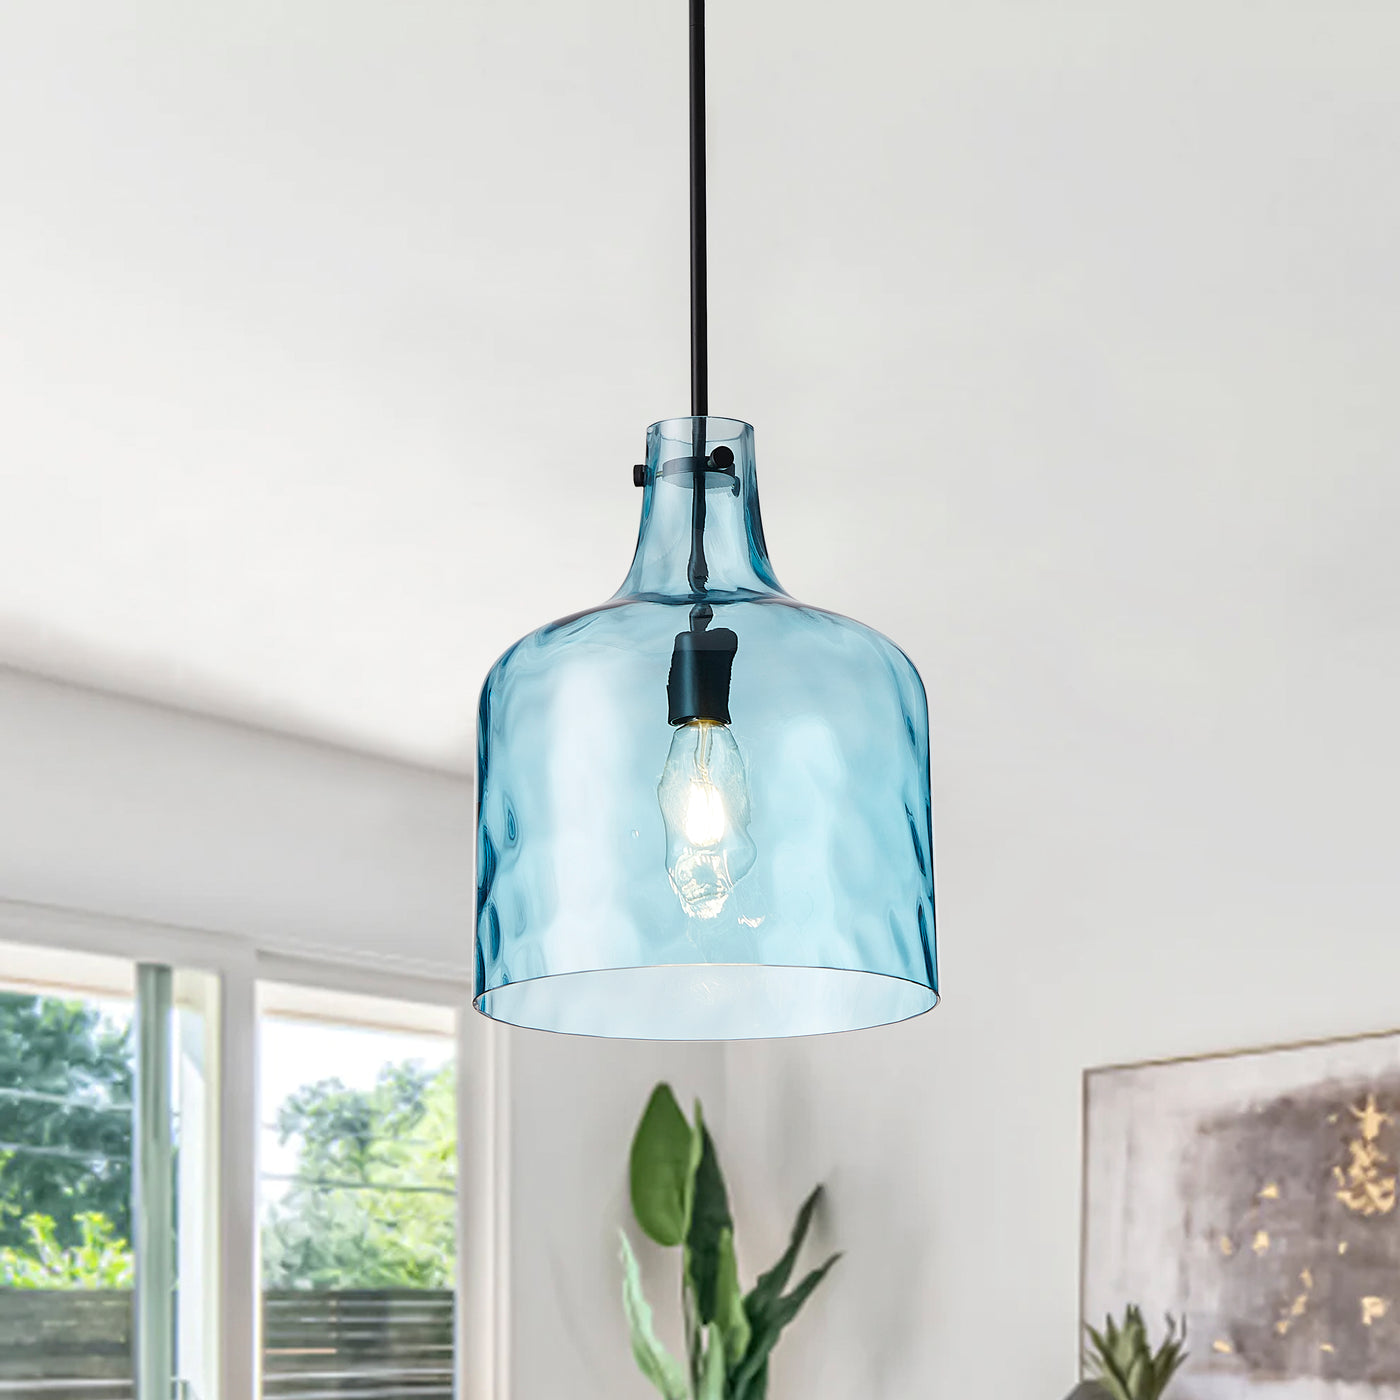 1-Light Modern with Textured Glass Shade Pendant Lighting